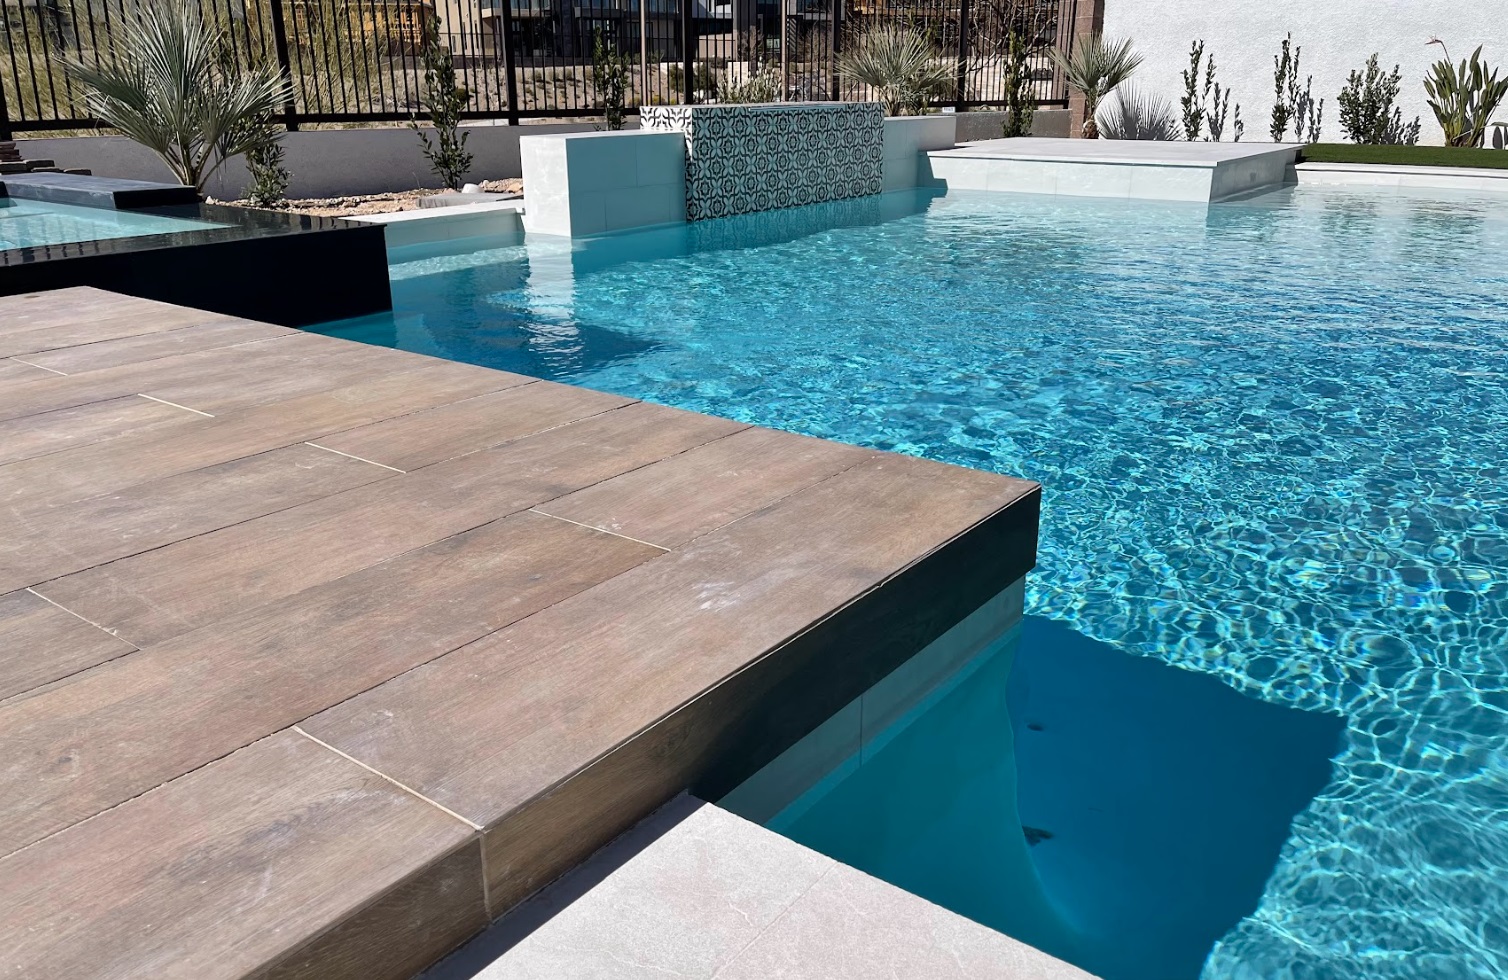 Las Vegas Pool Builders - Fill the Pool with Water2